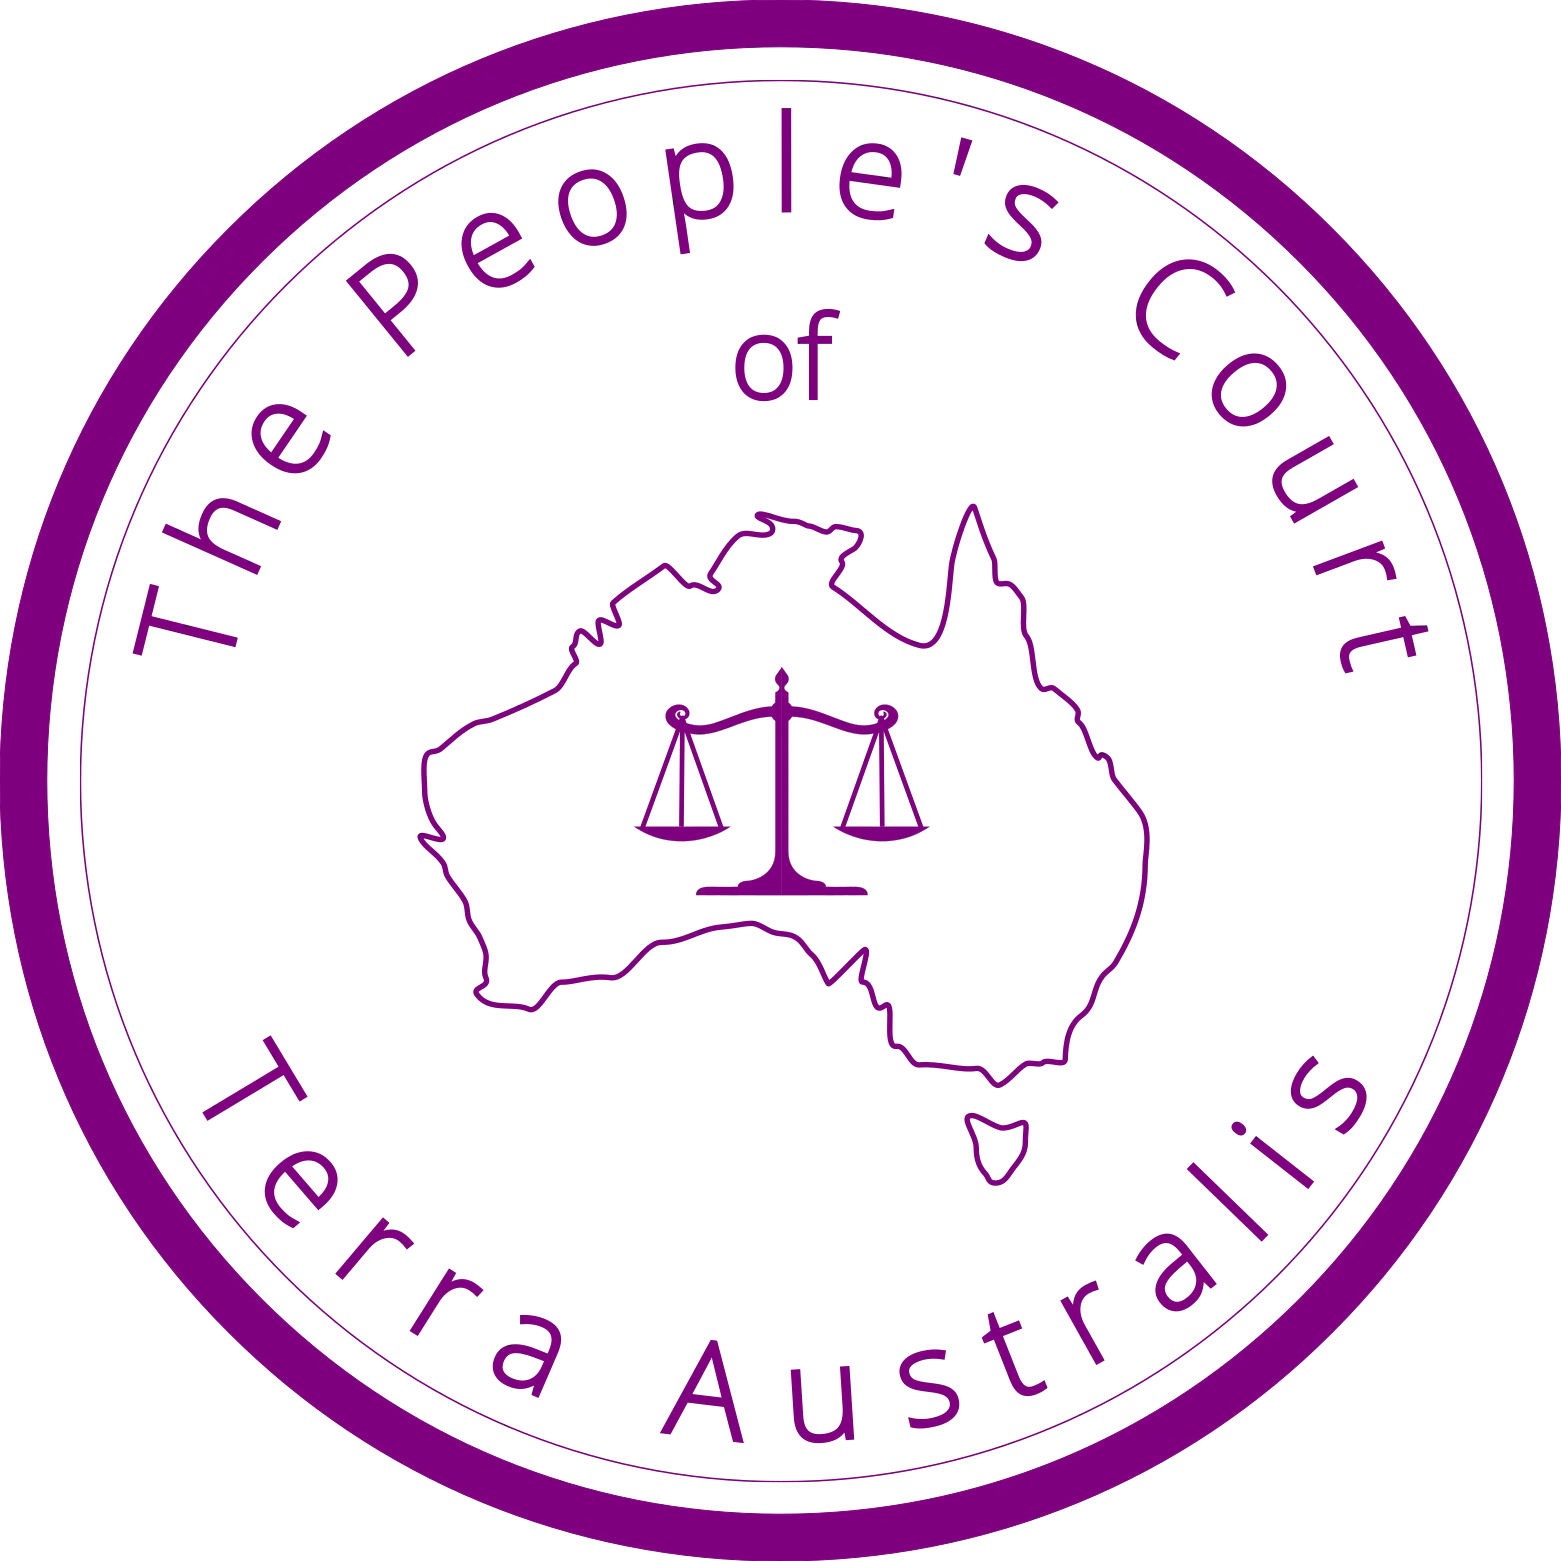 The People's Court of Terra Australis